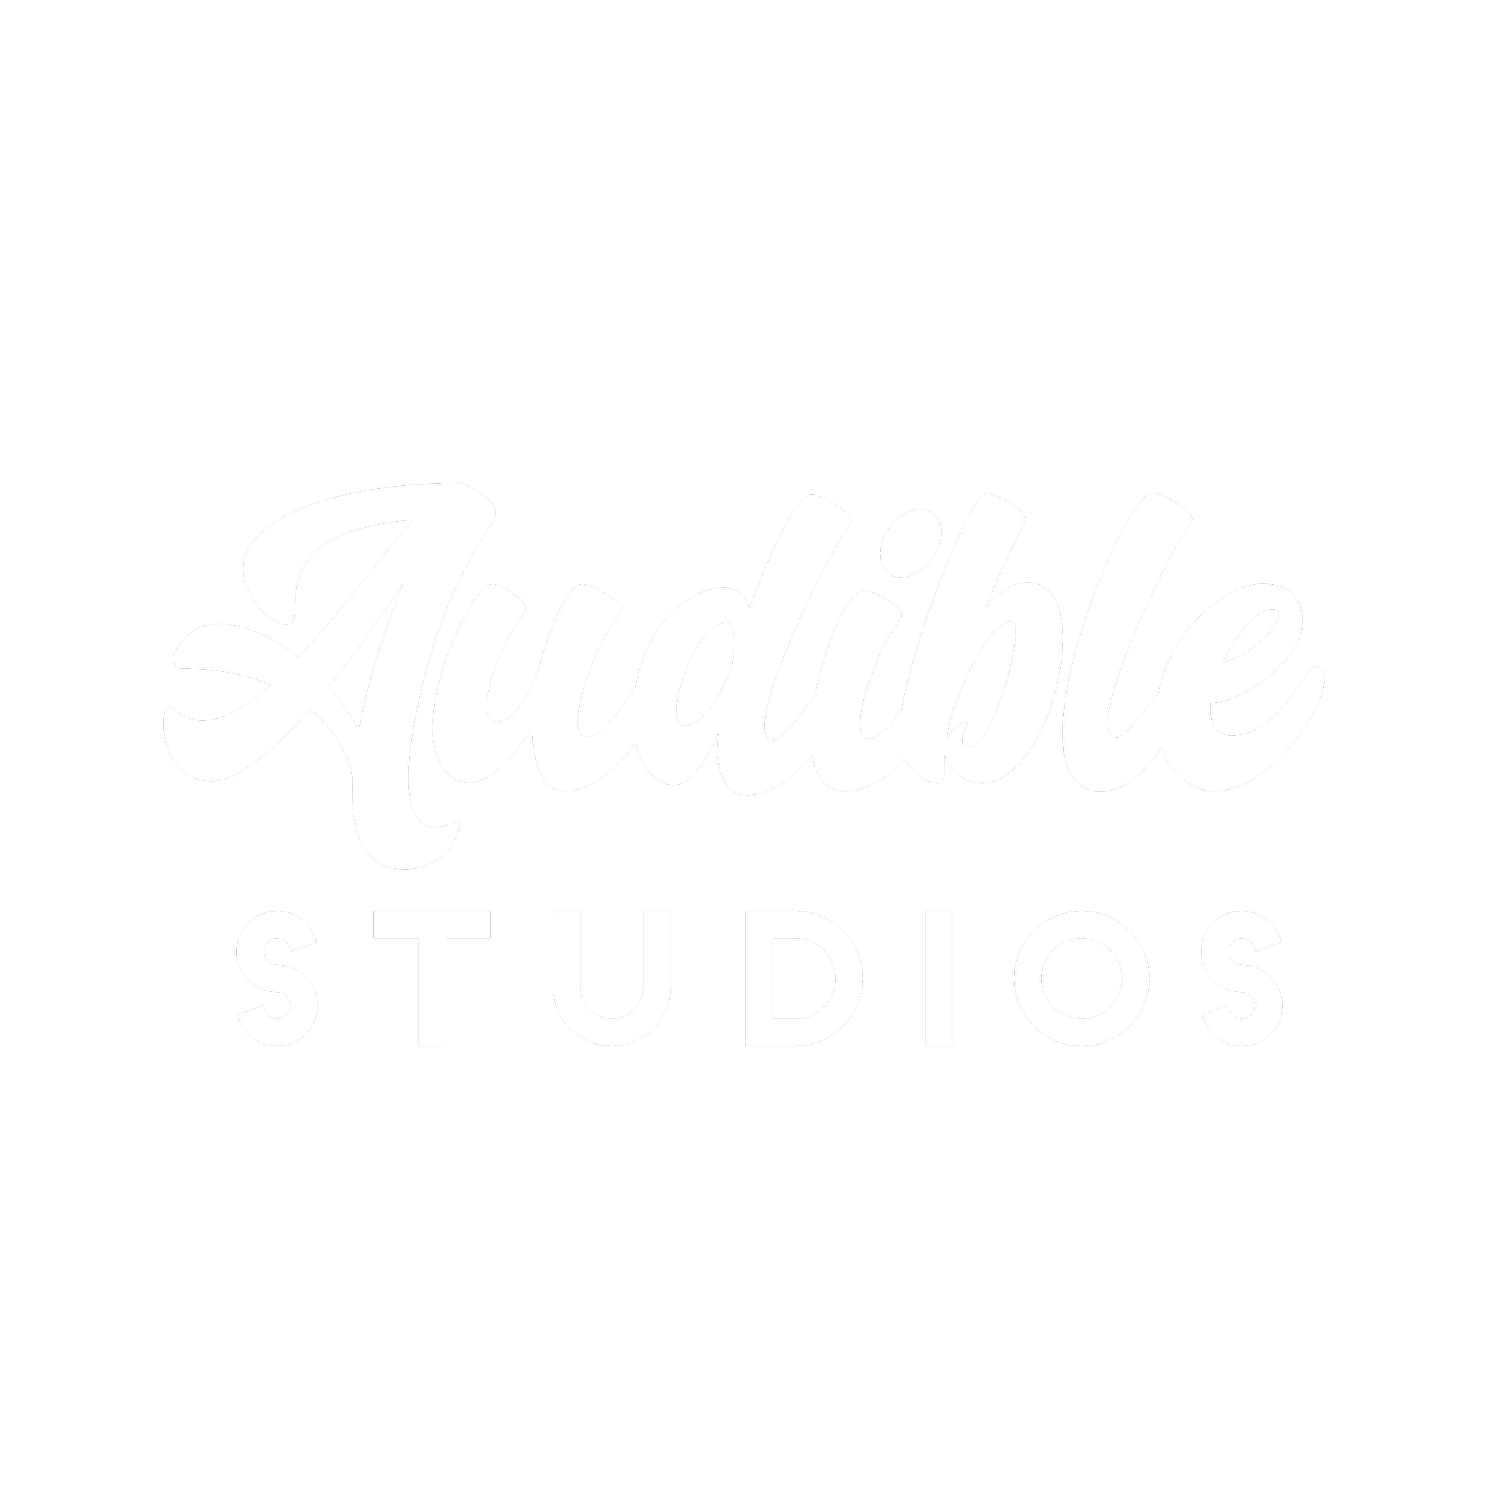 Audible Studios